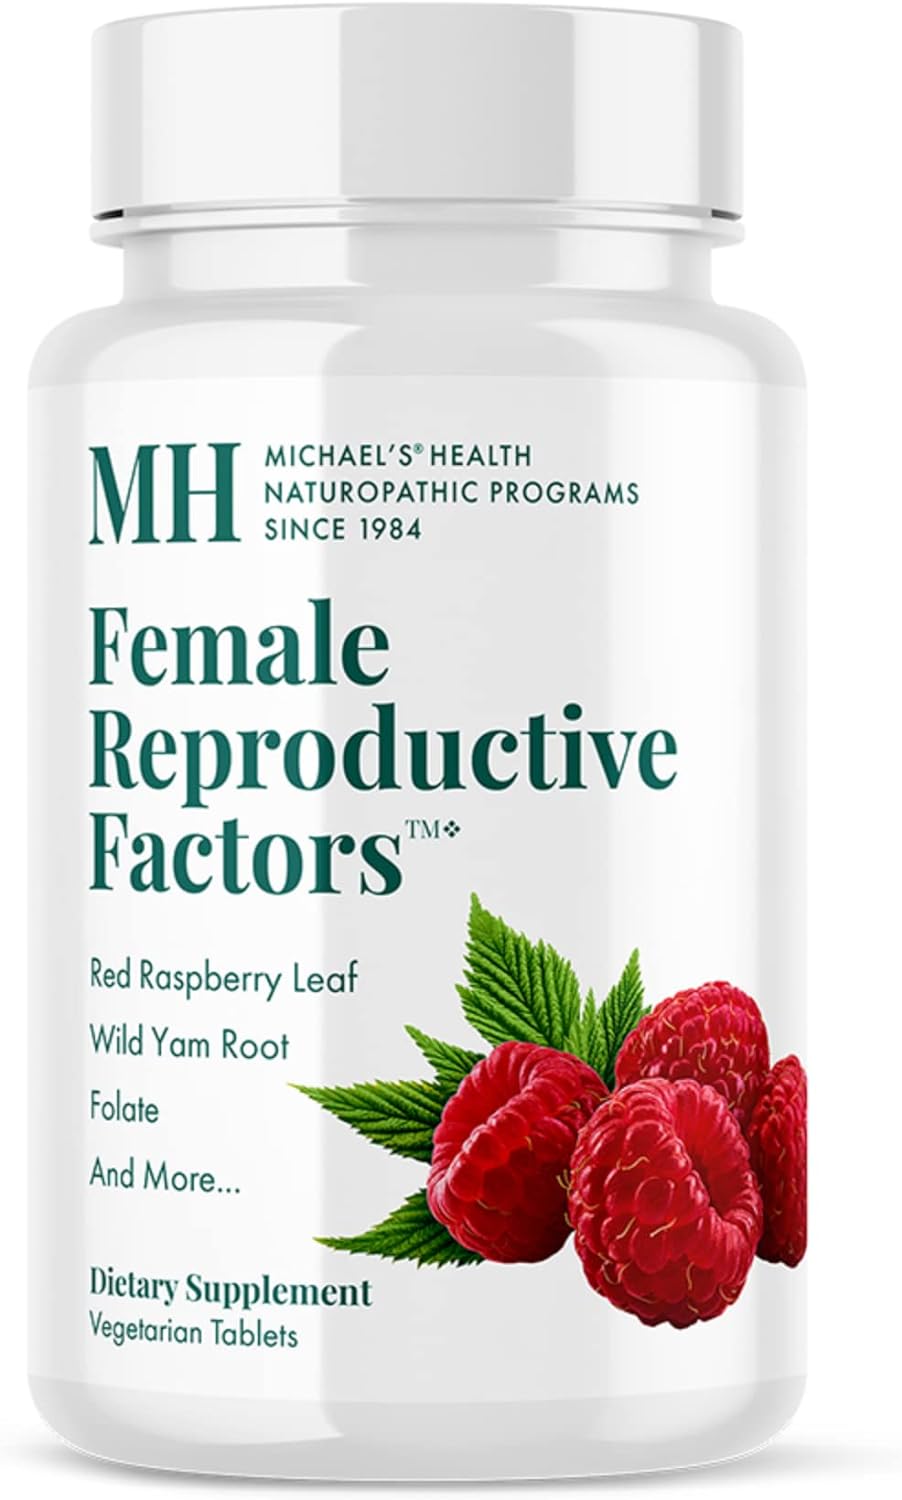 MICHAEL'S Health Naturopathic Programs Female Reproductive Factors - 1